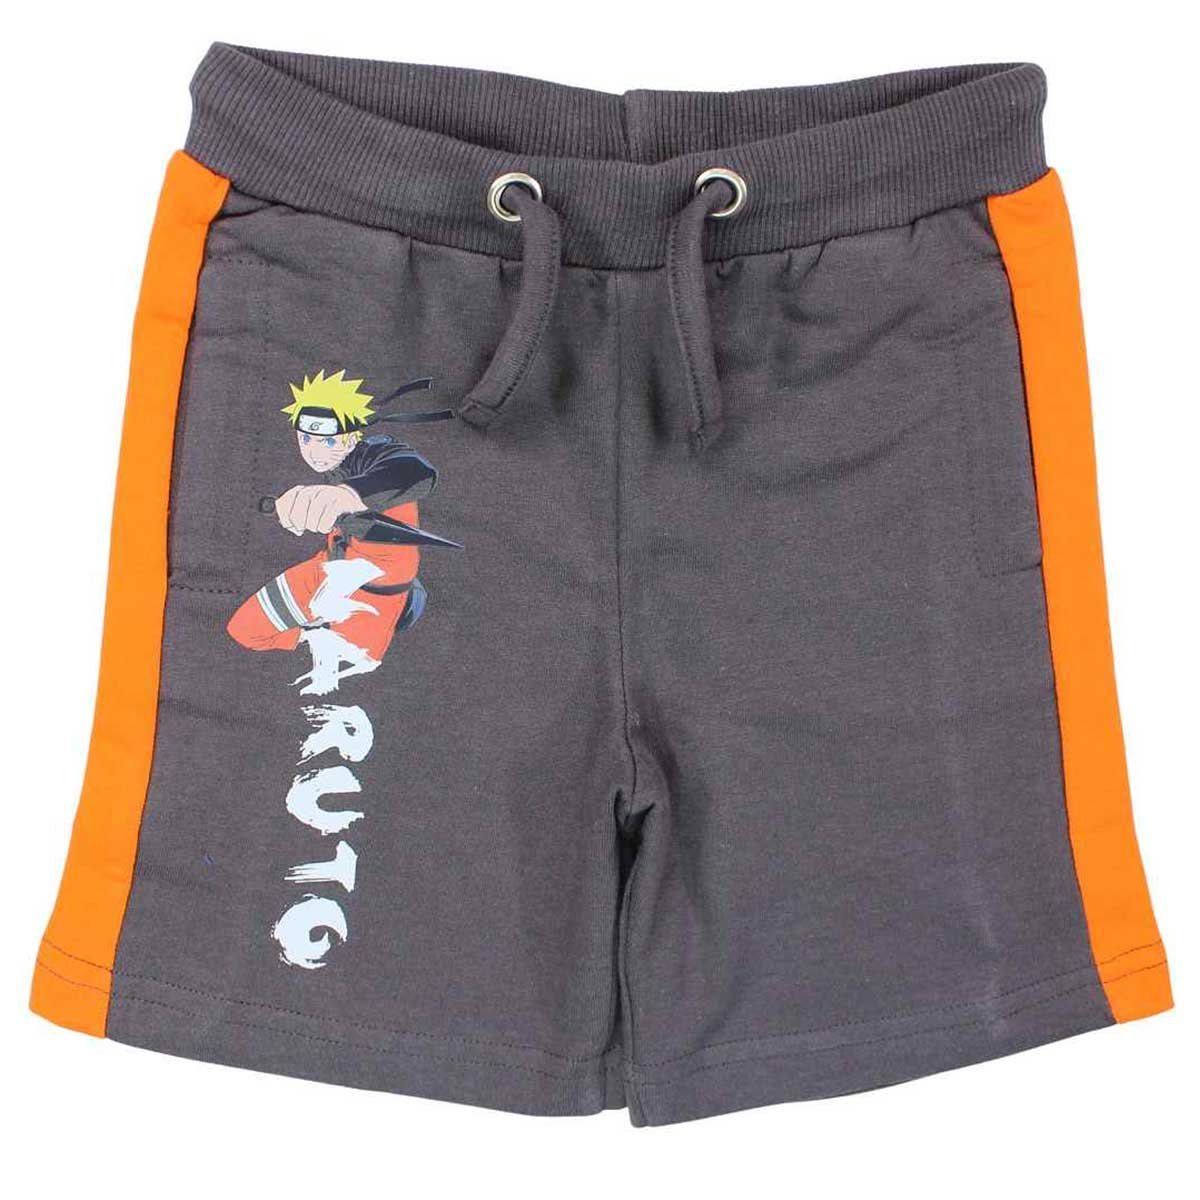 Naruto 152 bis Jungen 110 Shippuden Kinder Gr. 100% Grau Shorts Naruto Baumwolle Shorts